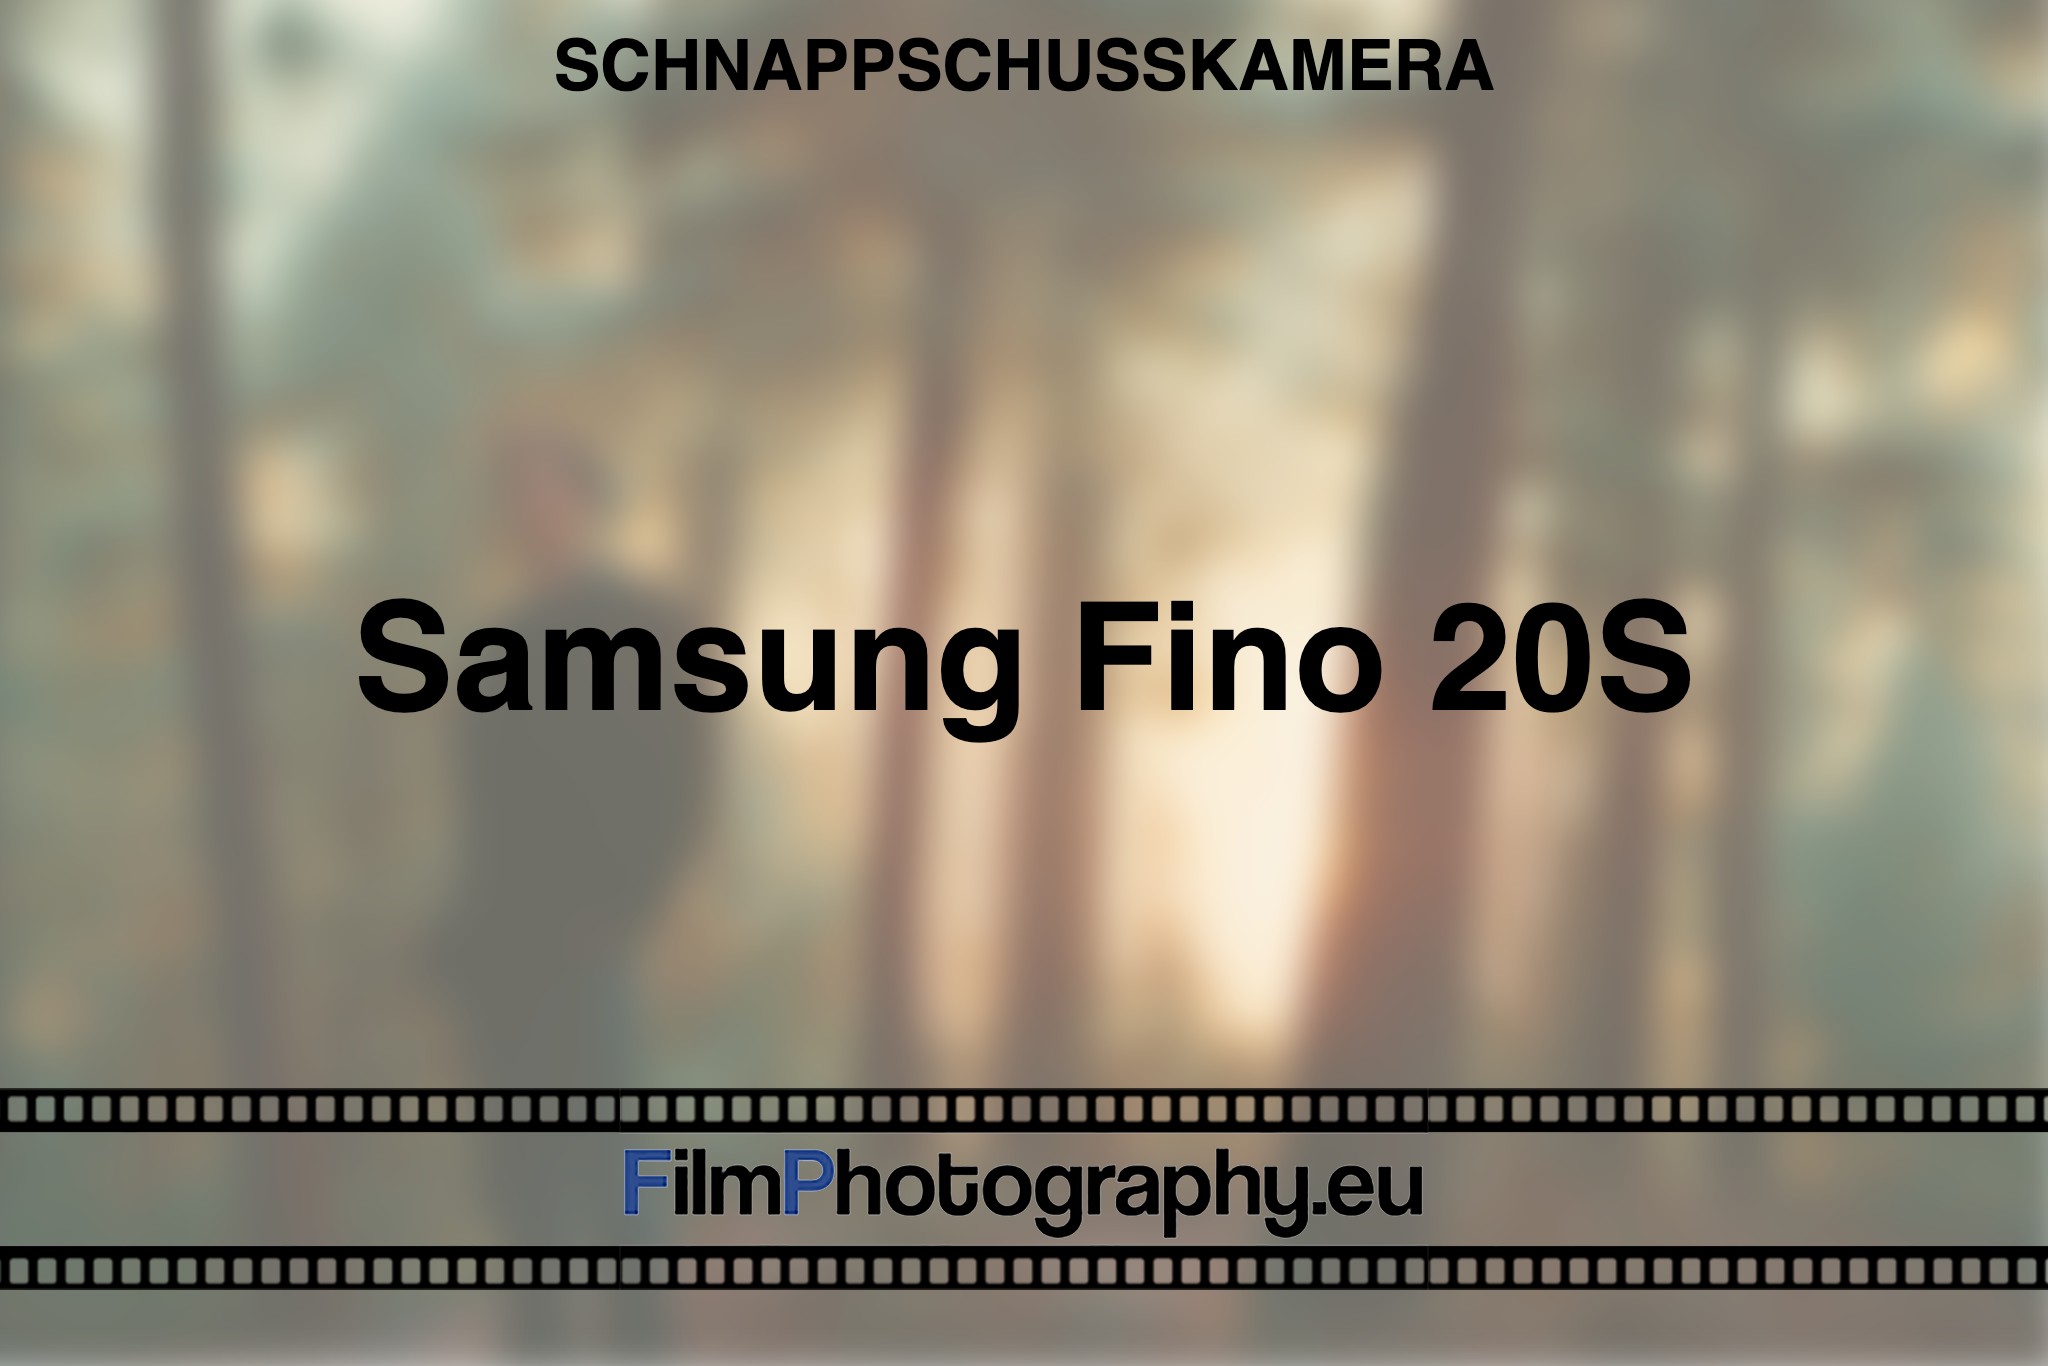 samsung-fino-20s-schnappschusskamera-bnv